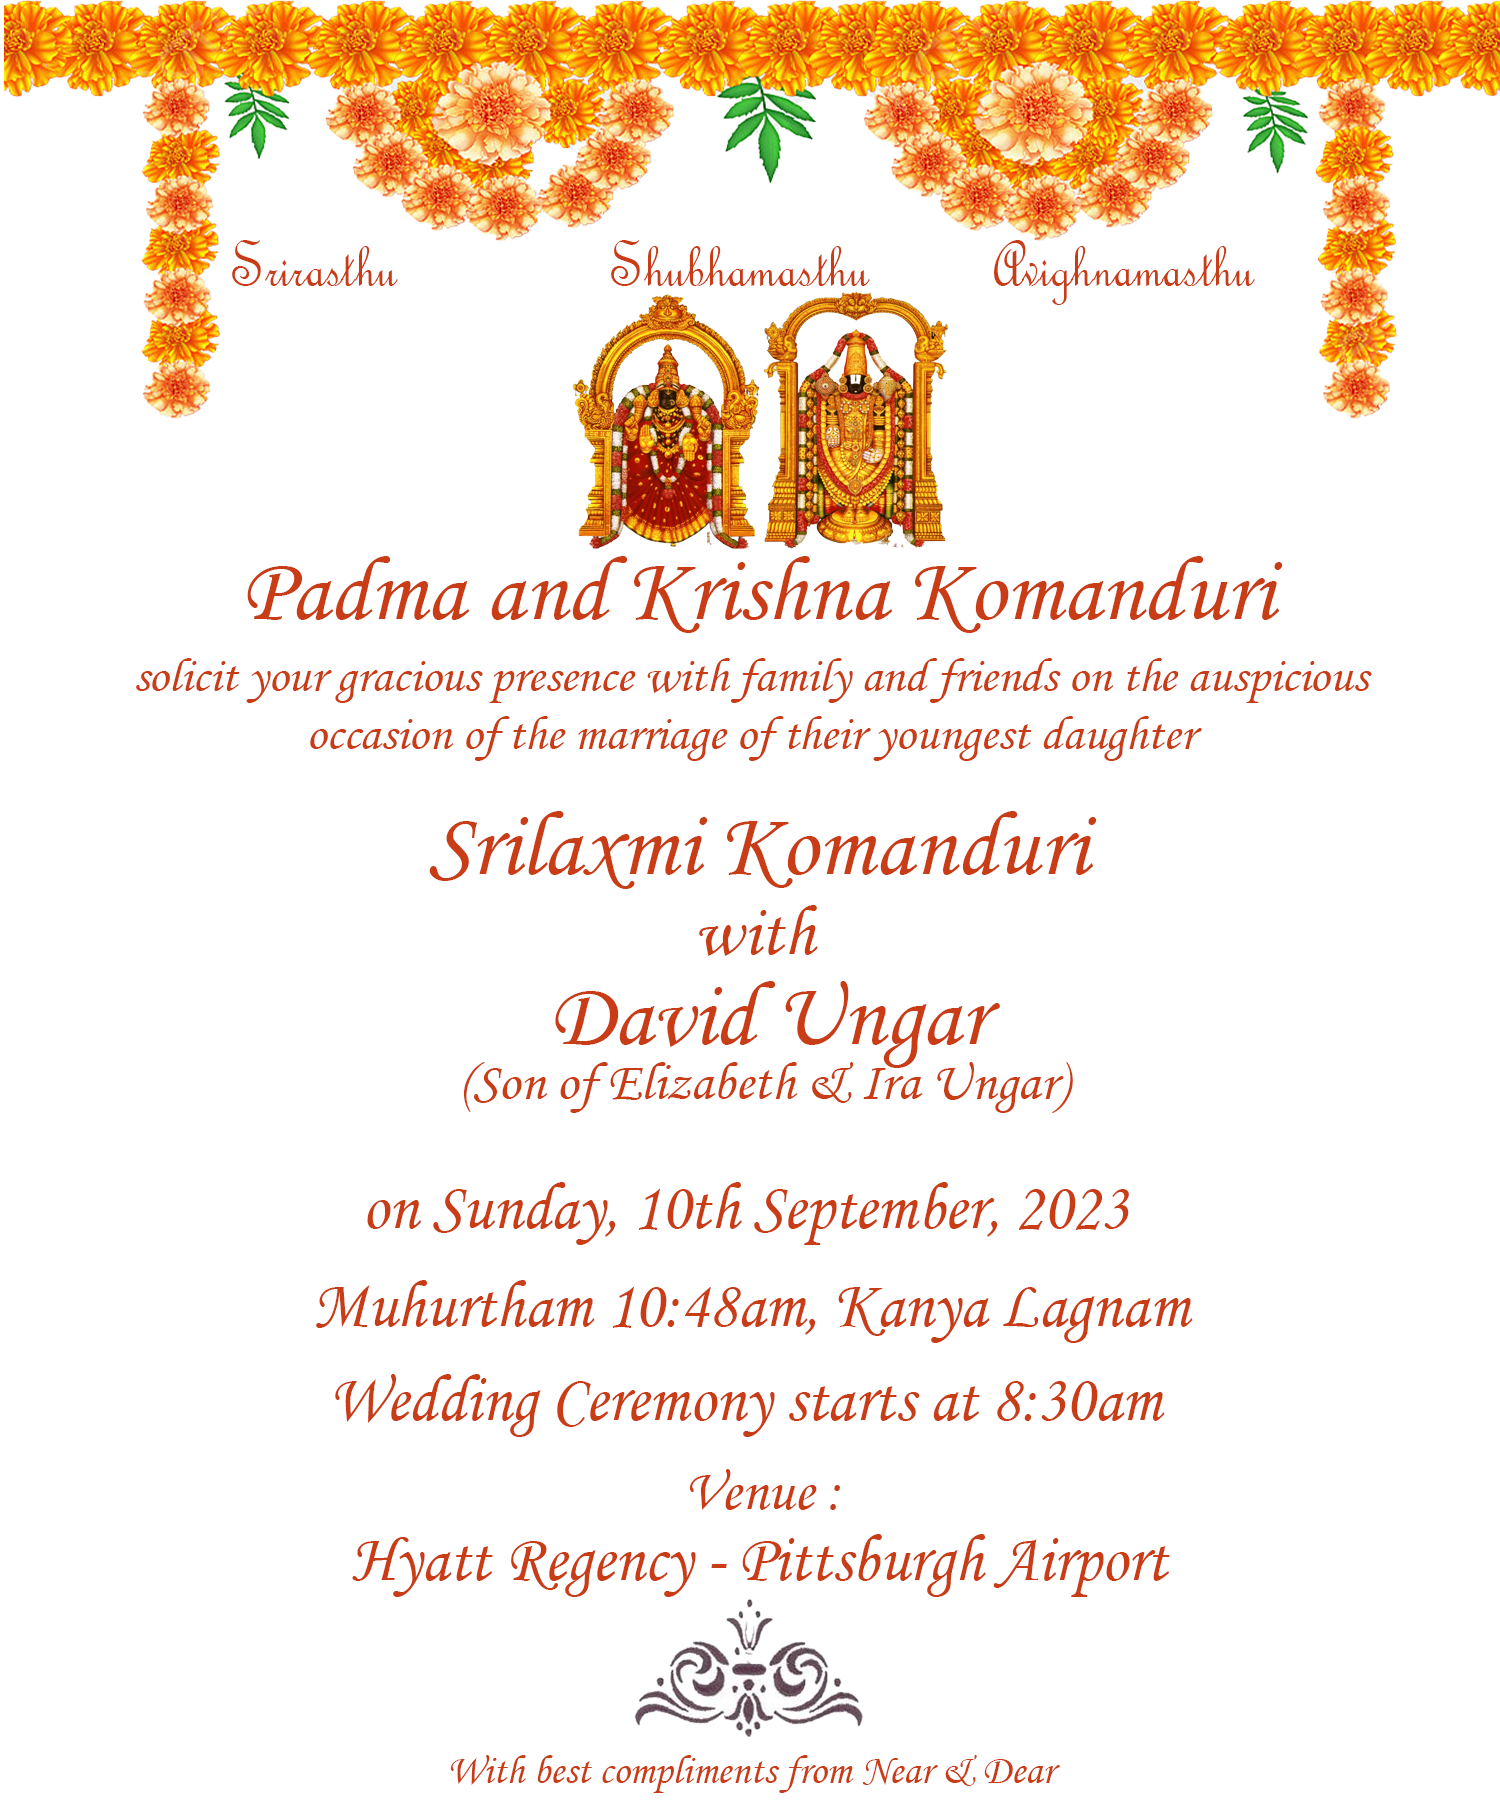 The Wedding Website of David Ungar and Srilaxmi Komanduri